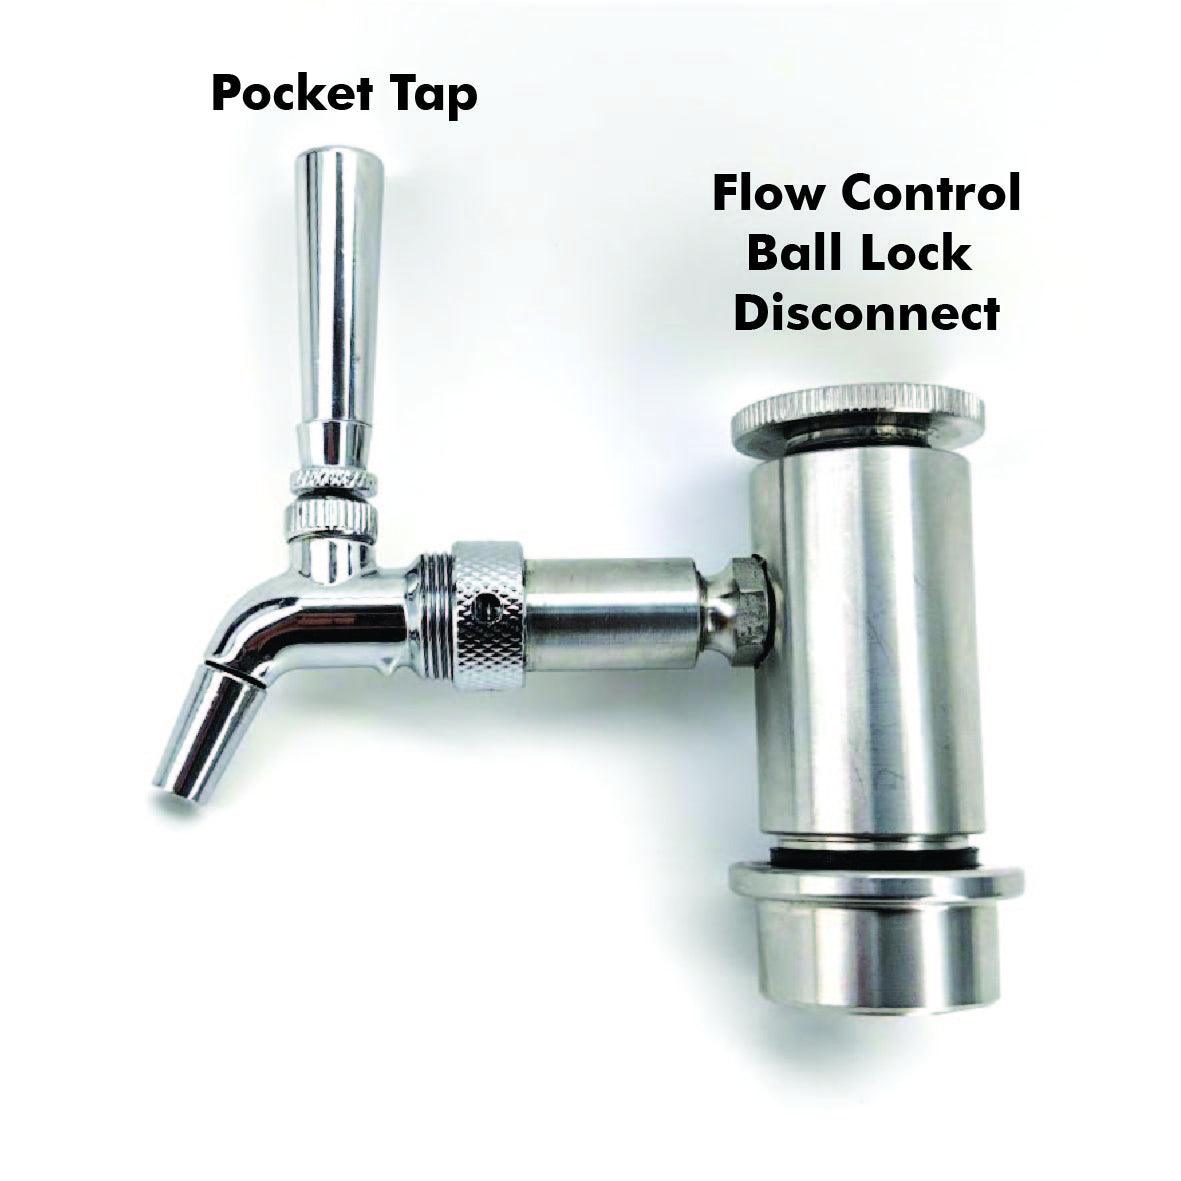 Flow control Ball Lock Disconnect - KegLand